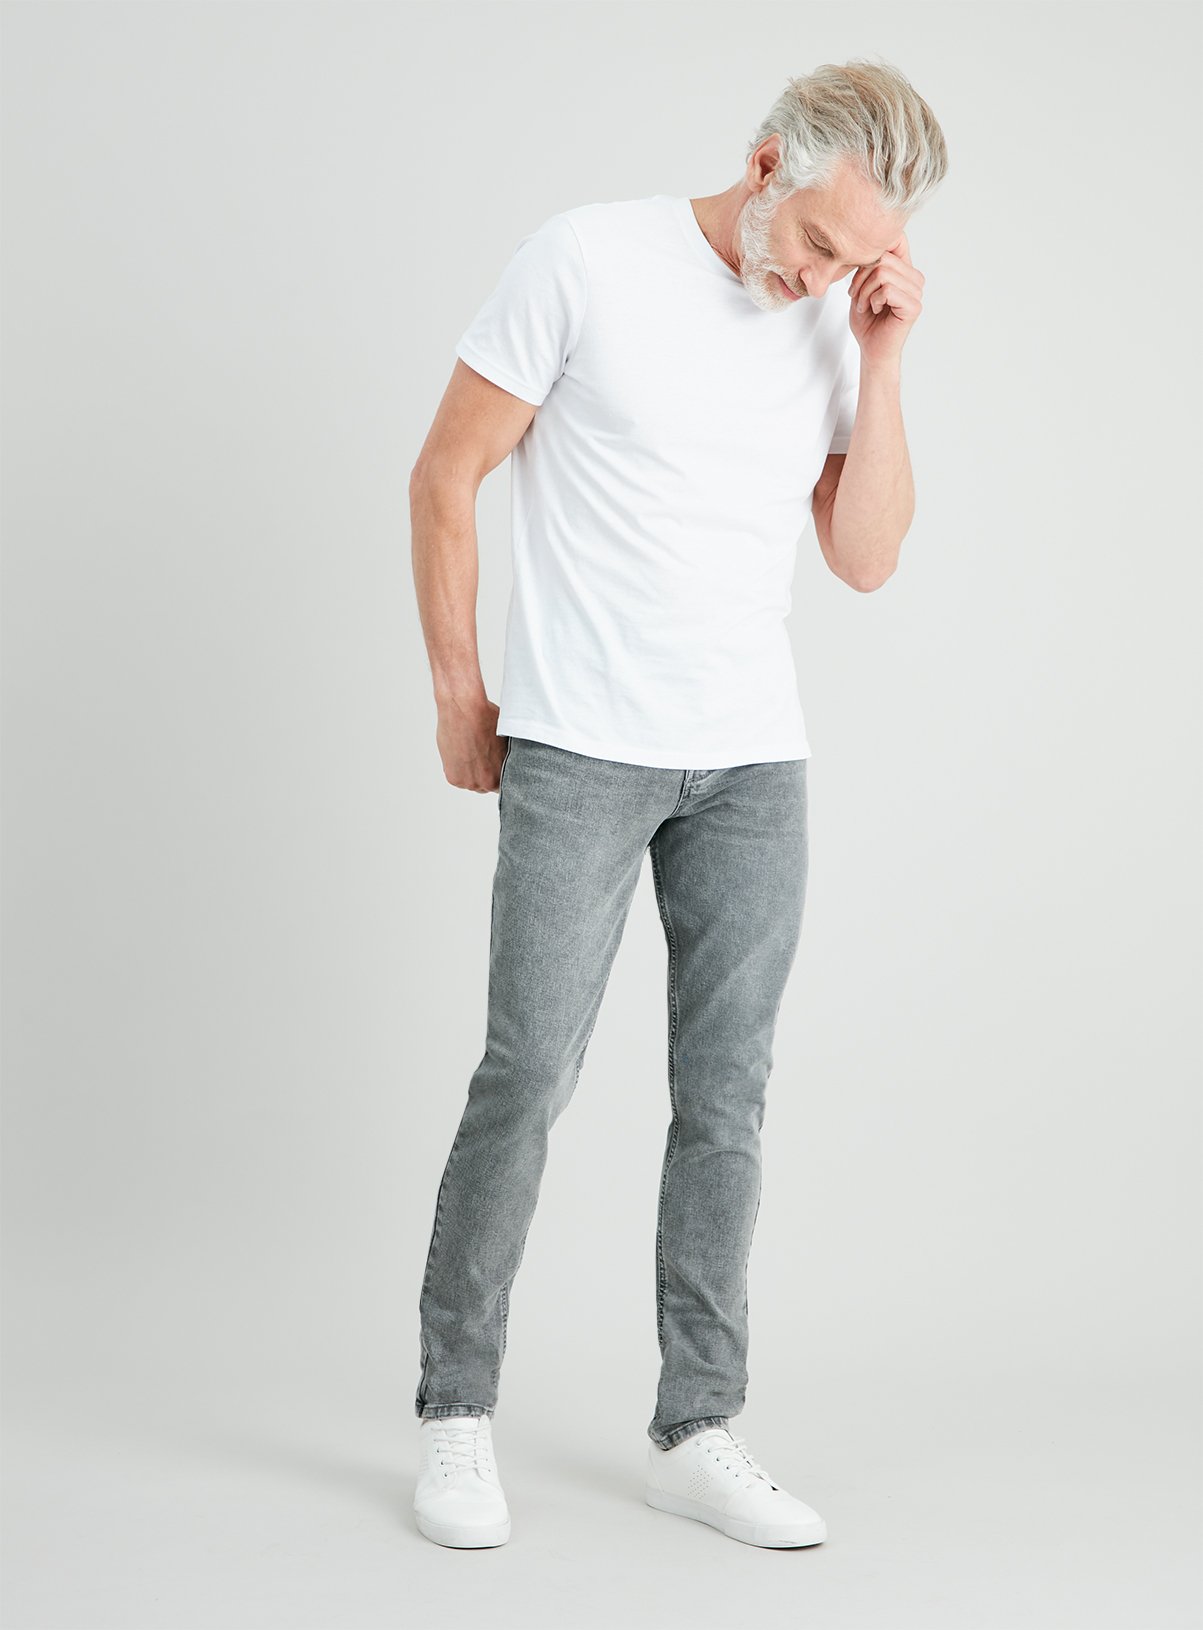 pale grey jeans